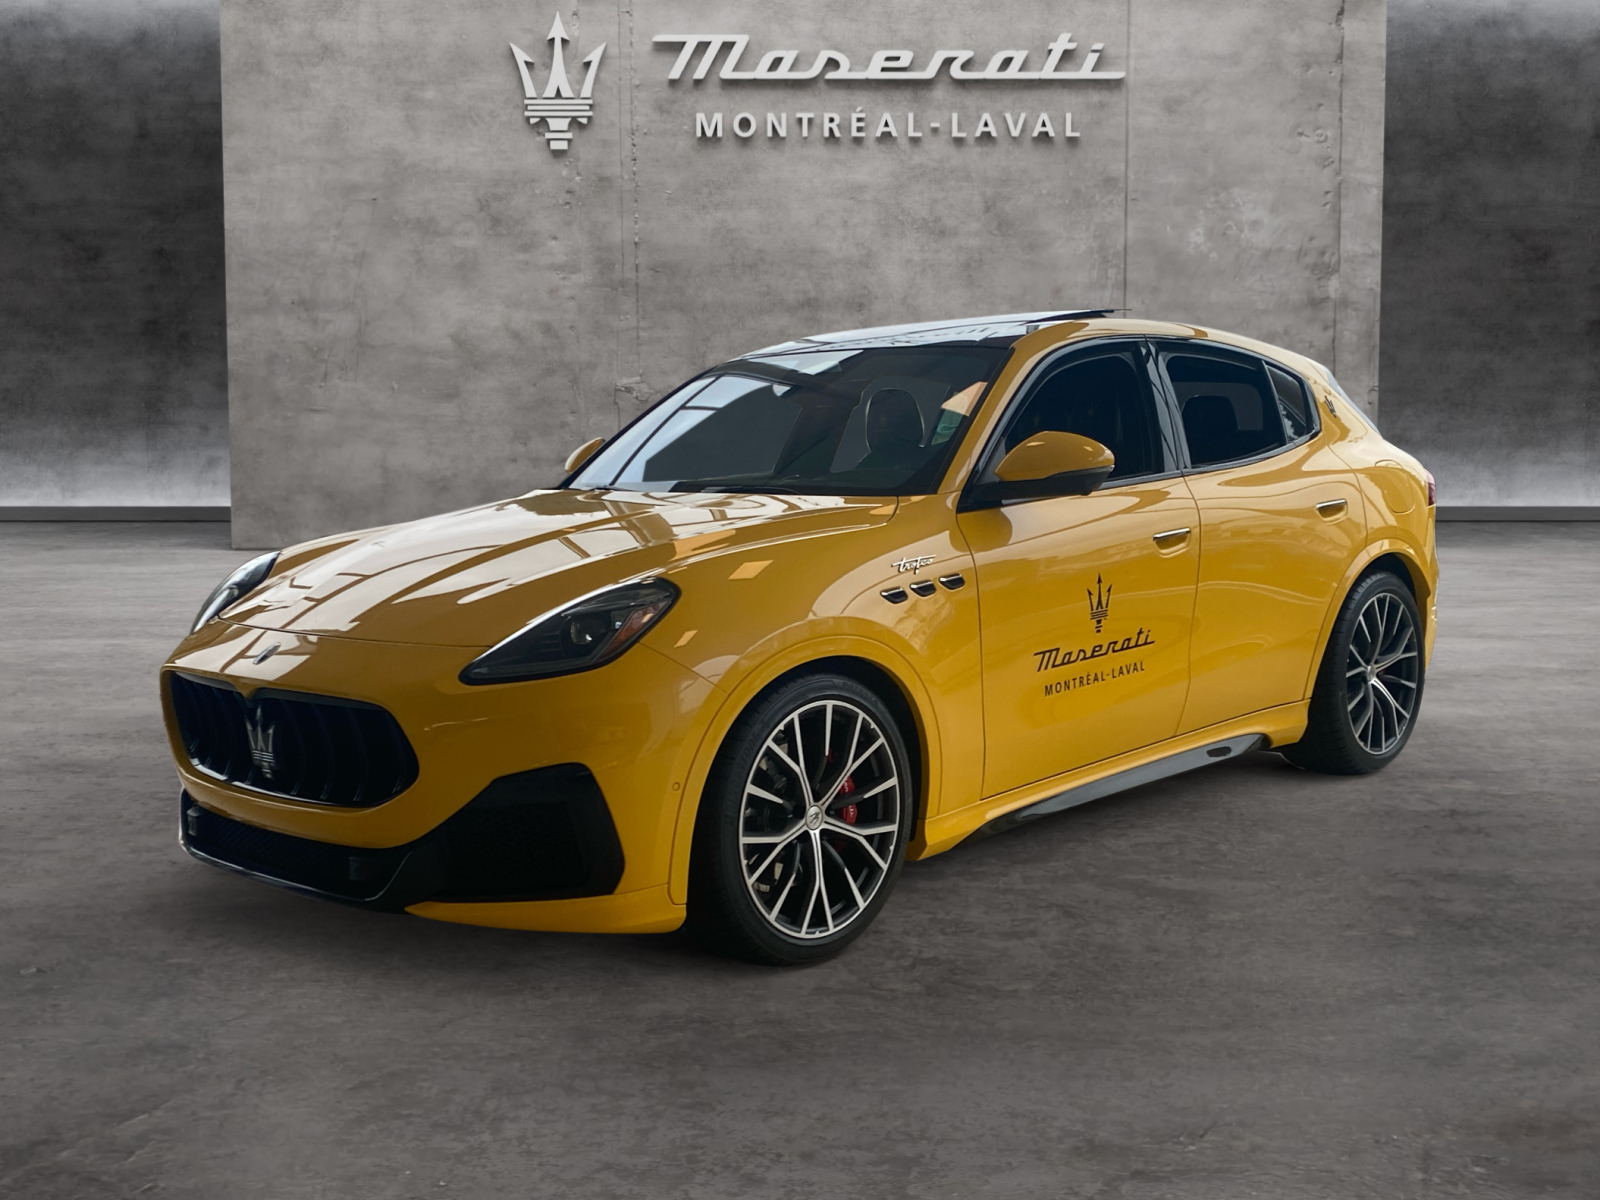 2023 Maserati Grecale V6 - 523 HP - Location à partir de 2365$/mois*